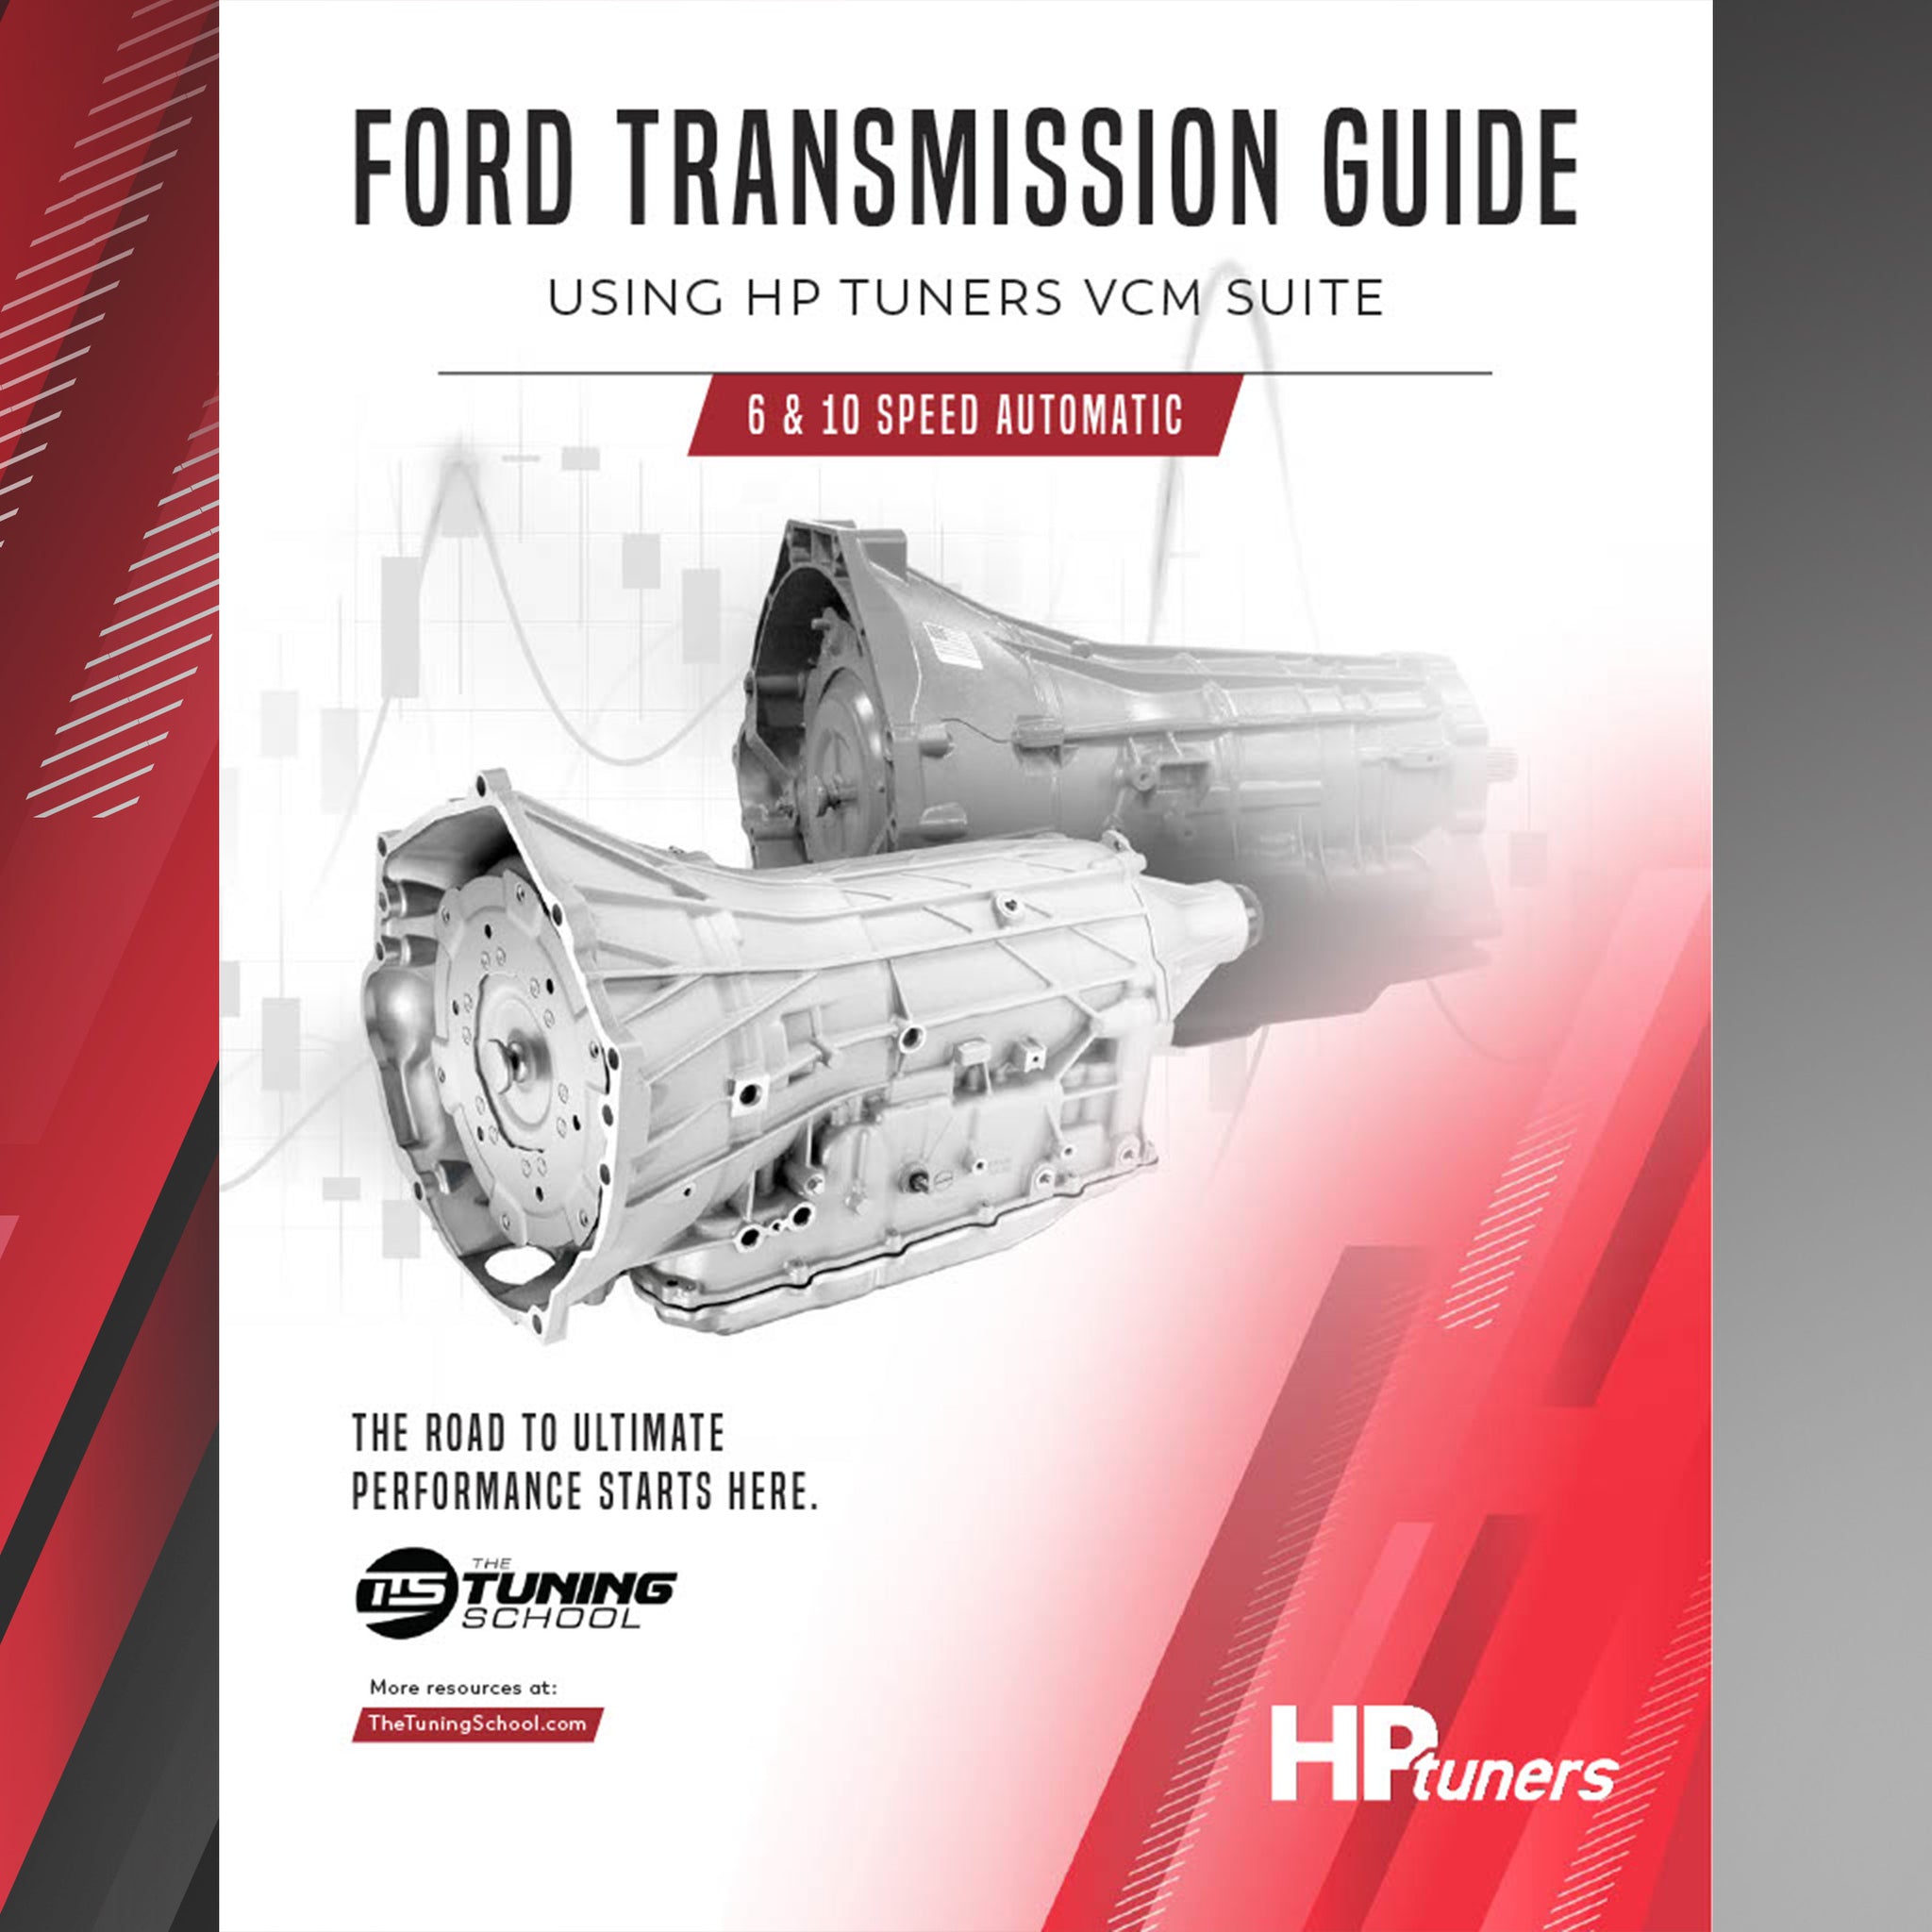 Ford Transmission Guide